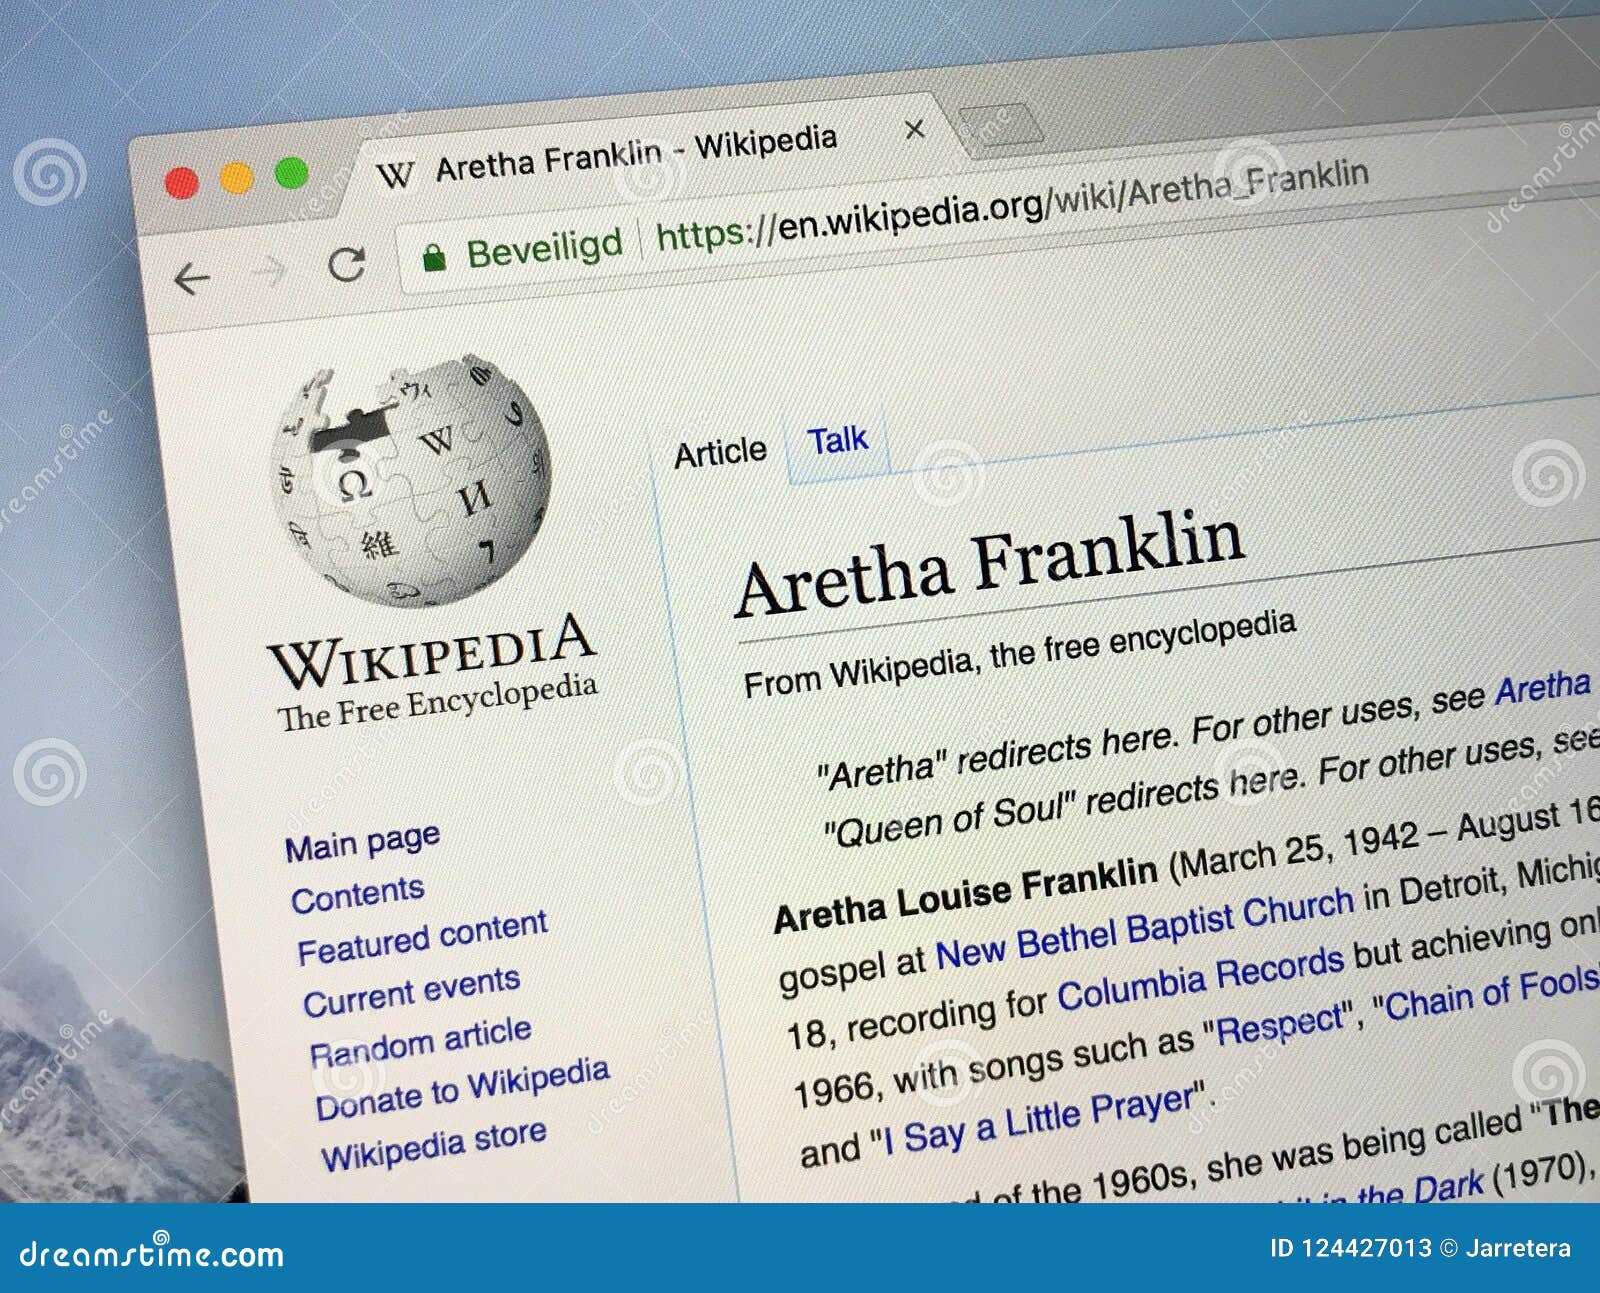 Aretha Franklin - Wikipedia